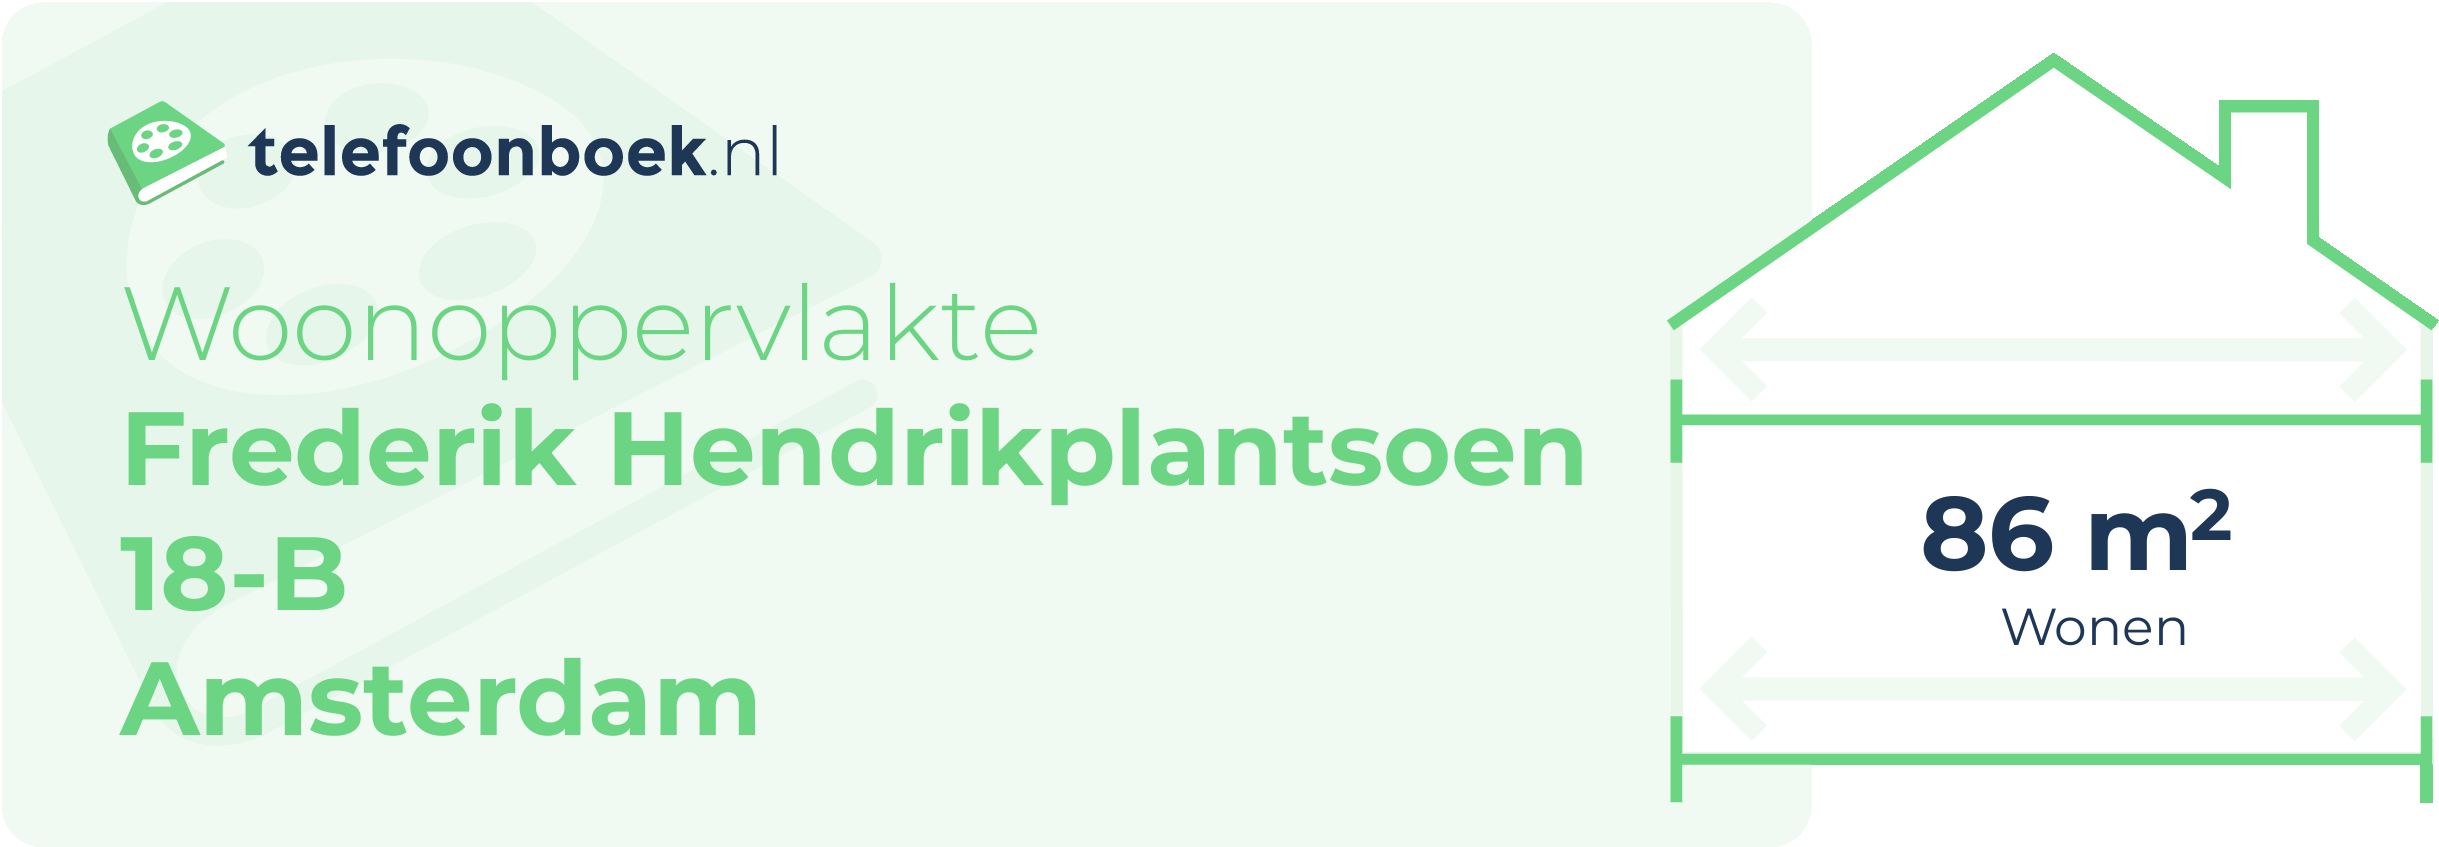 Woonoppervlakte Frederik Hendrikplantsoen 18-B Amsterdam